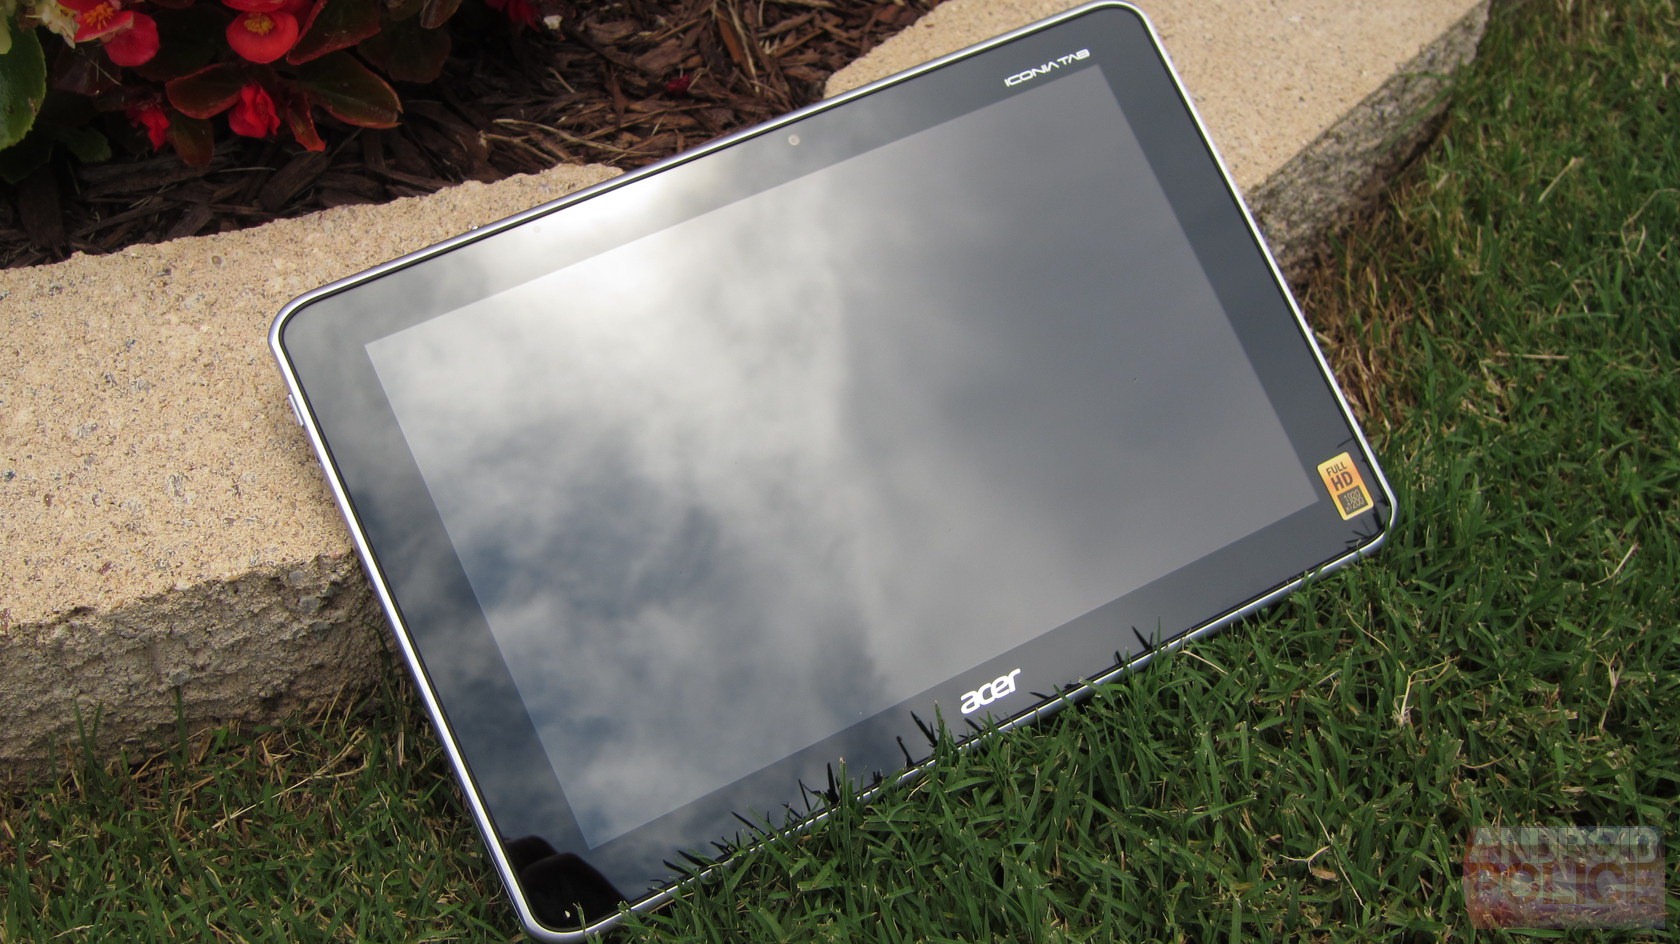  500TL - Acer A700 Tablet. Blutooth, GPS, Wi-fi 1920*1200p Ekran.